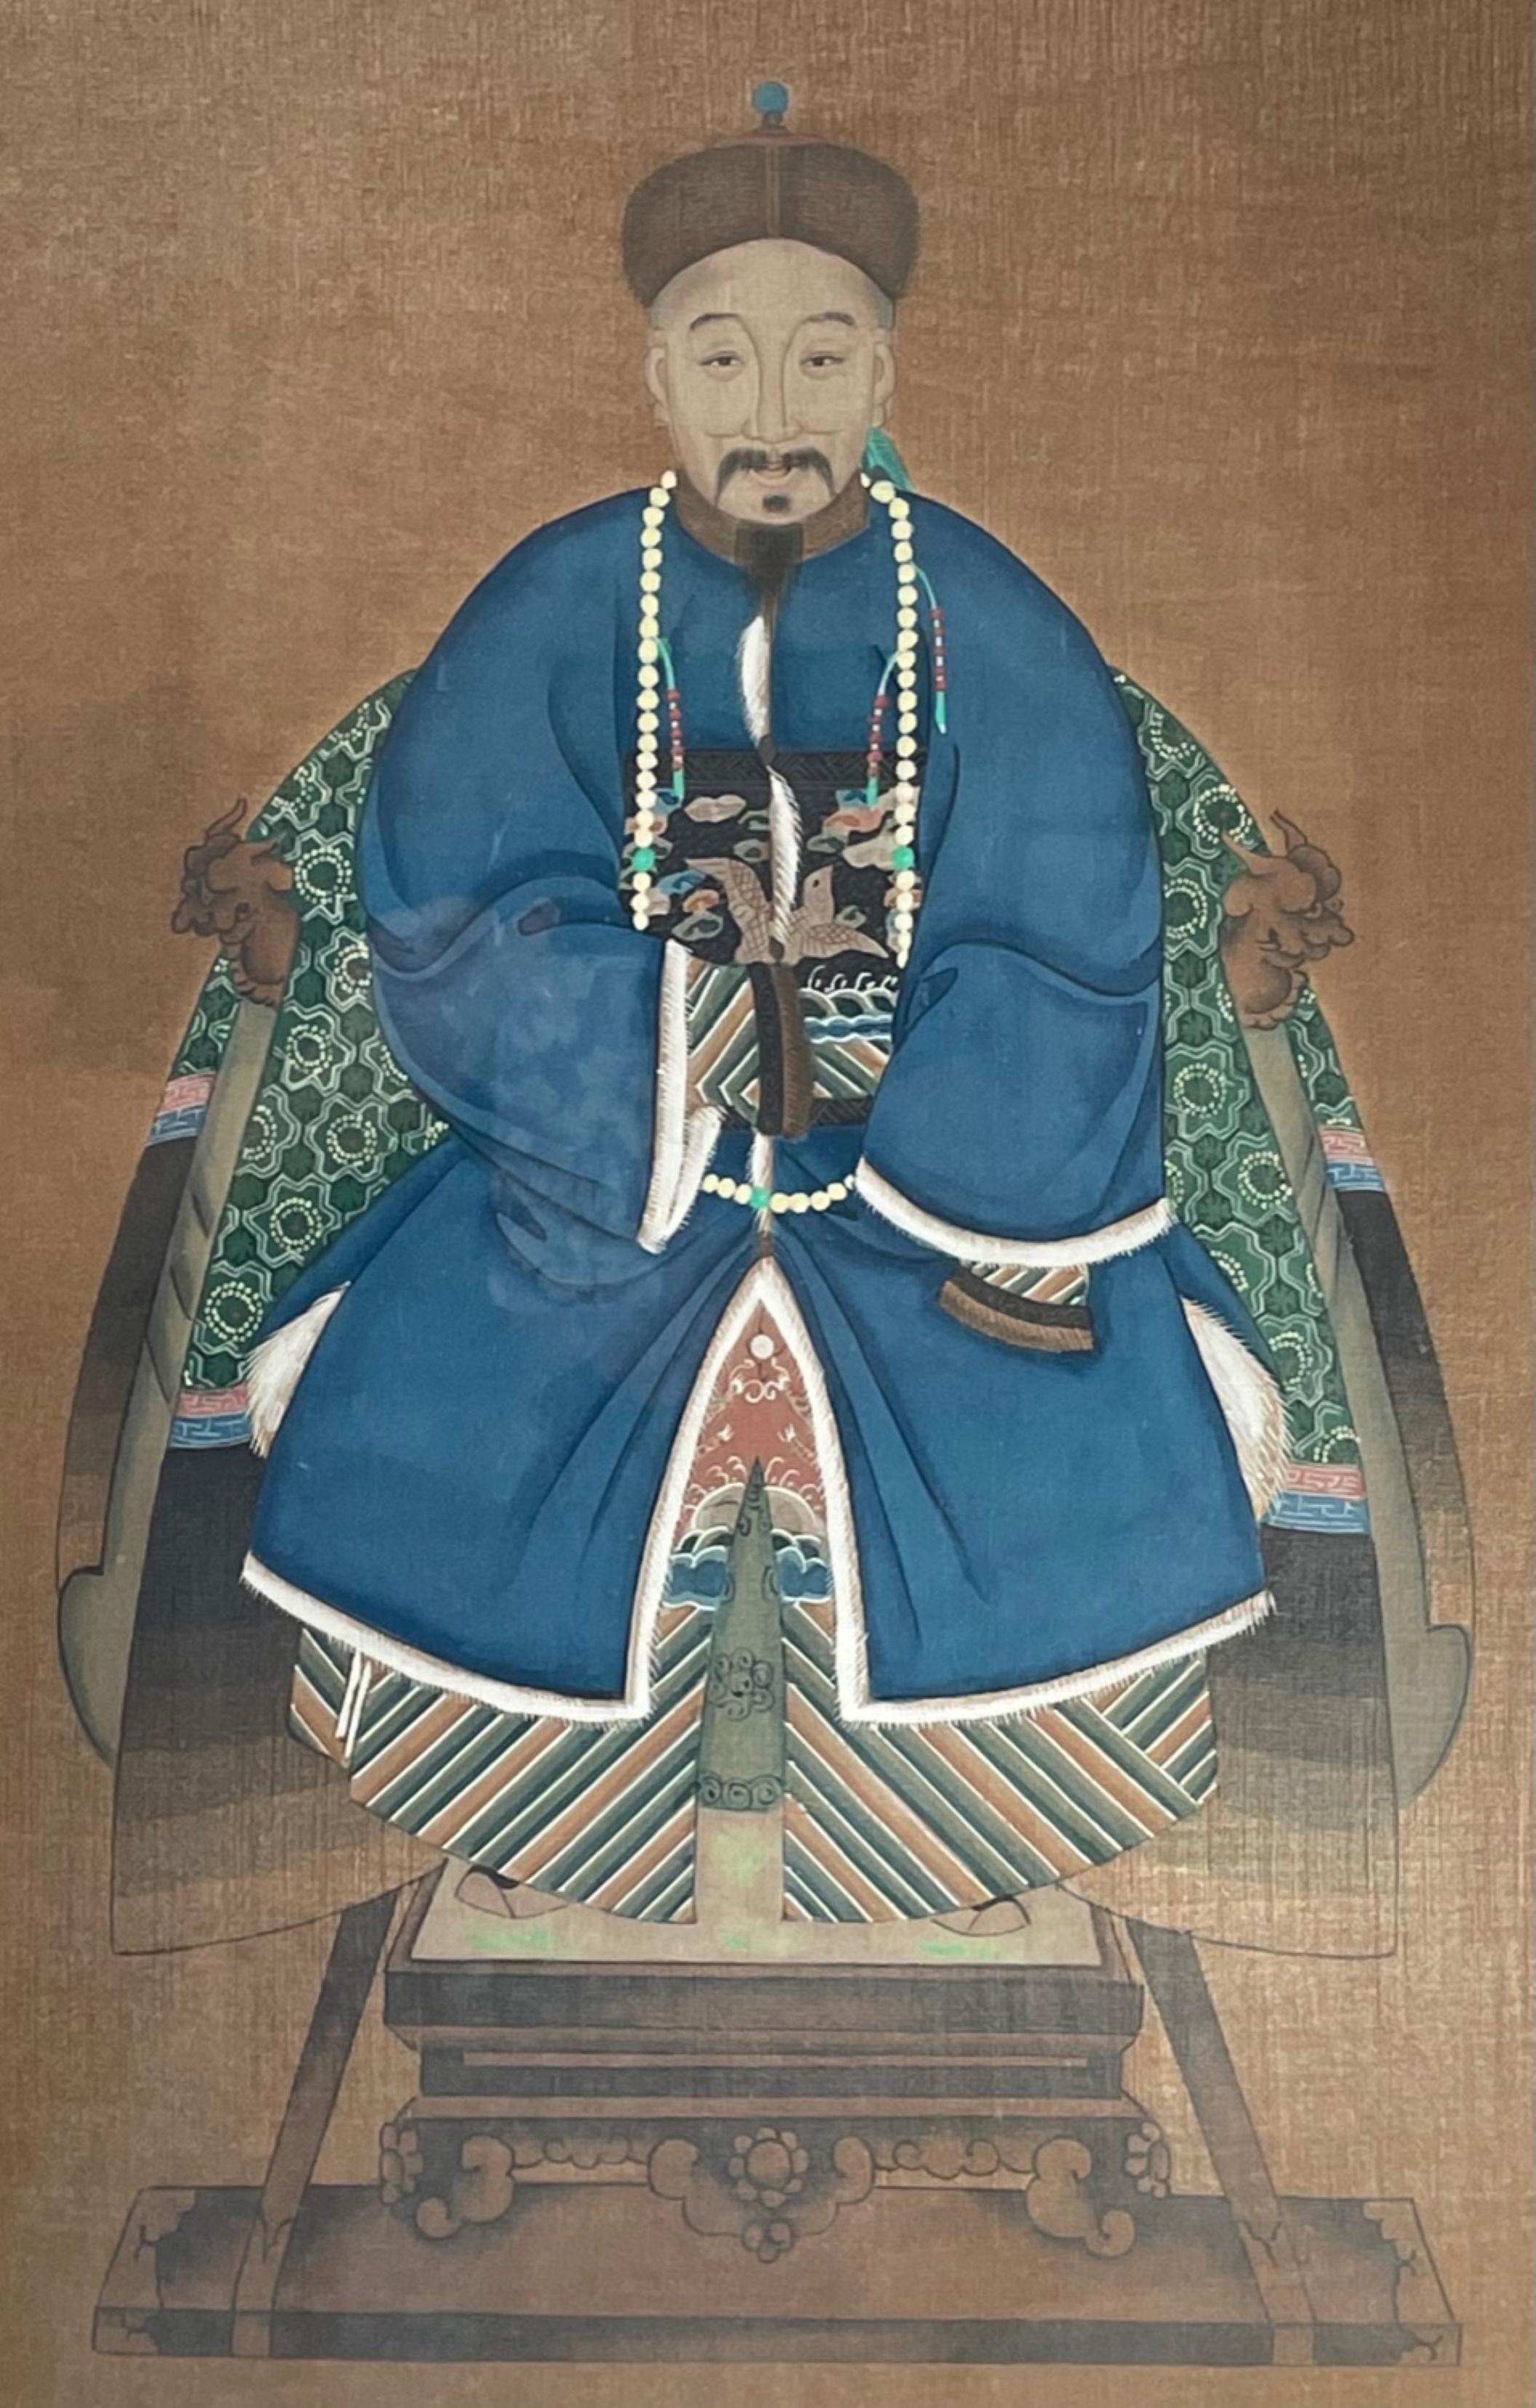 Qing Chinese Ancestor Portrait of a Mandarin Dignitary